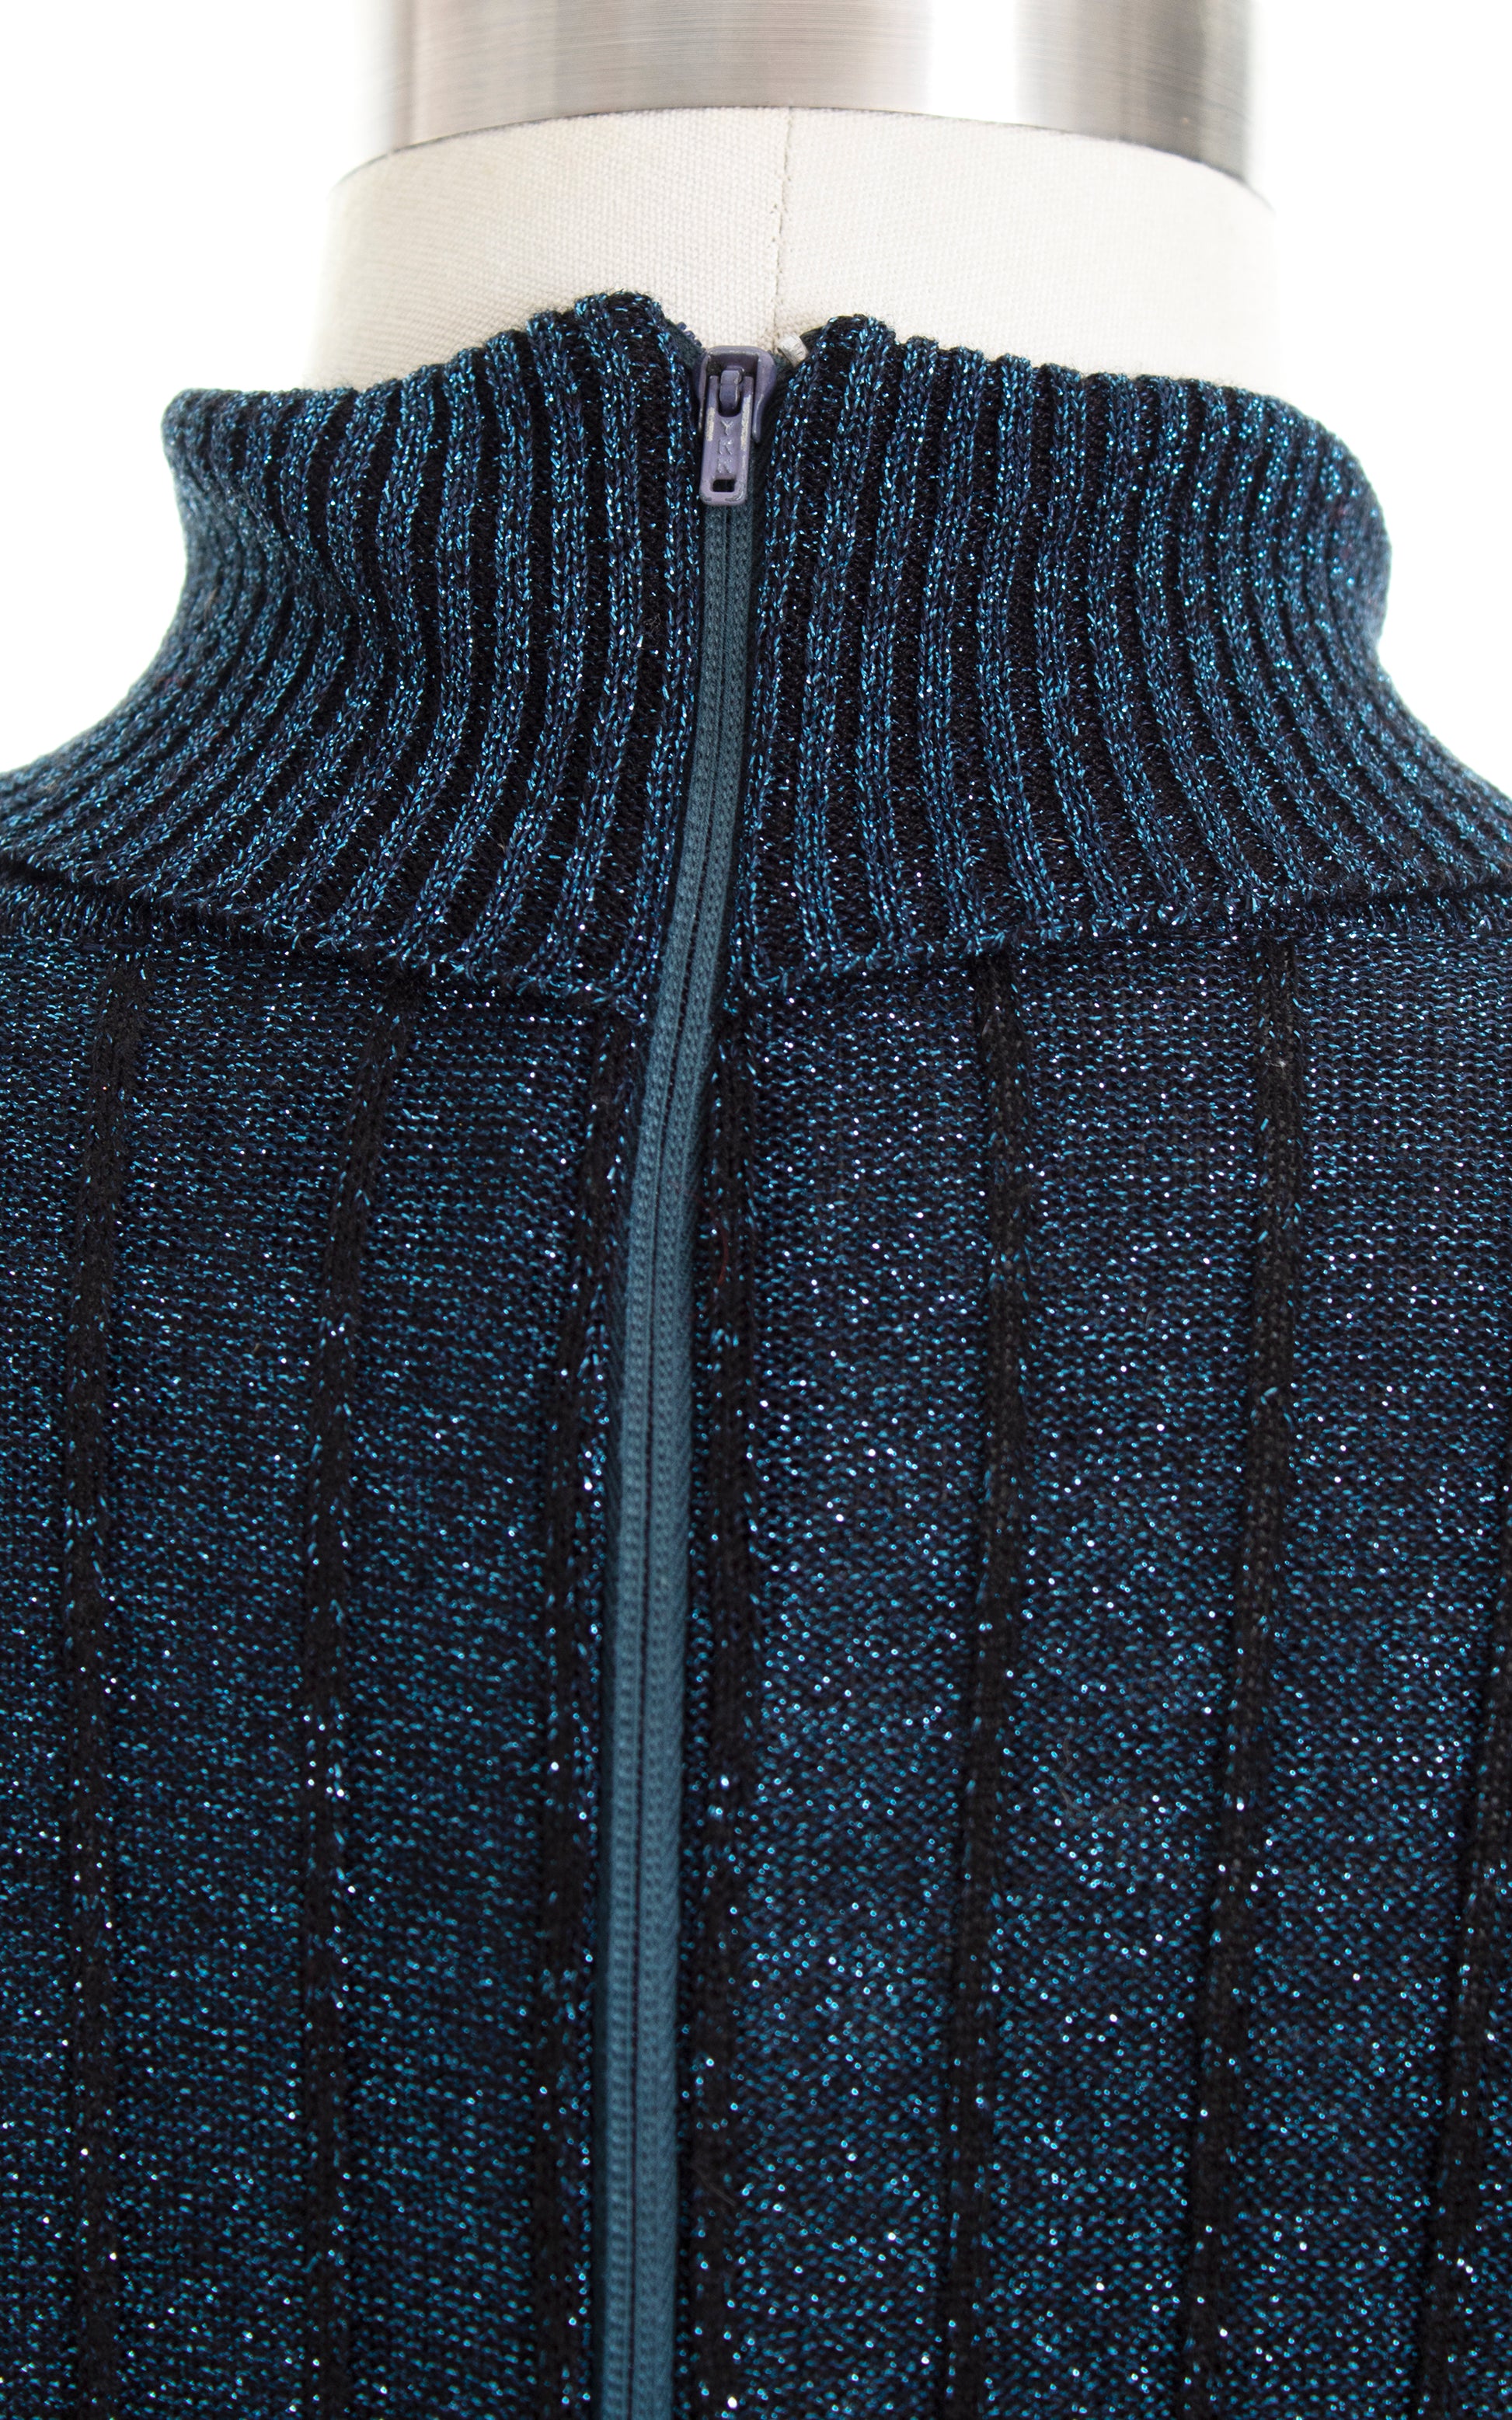 Vintage 1970s 70s WENJILLI Metallic Knit Blue Tunic Sweater Dress Birthday Life Vintage